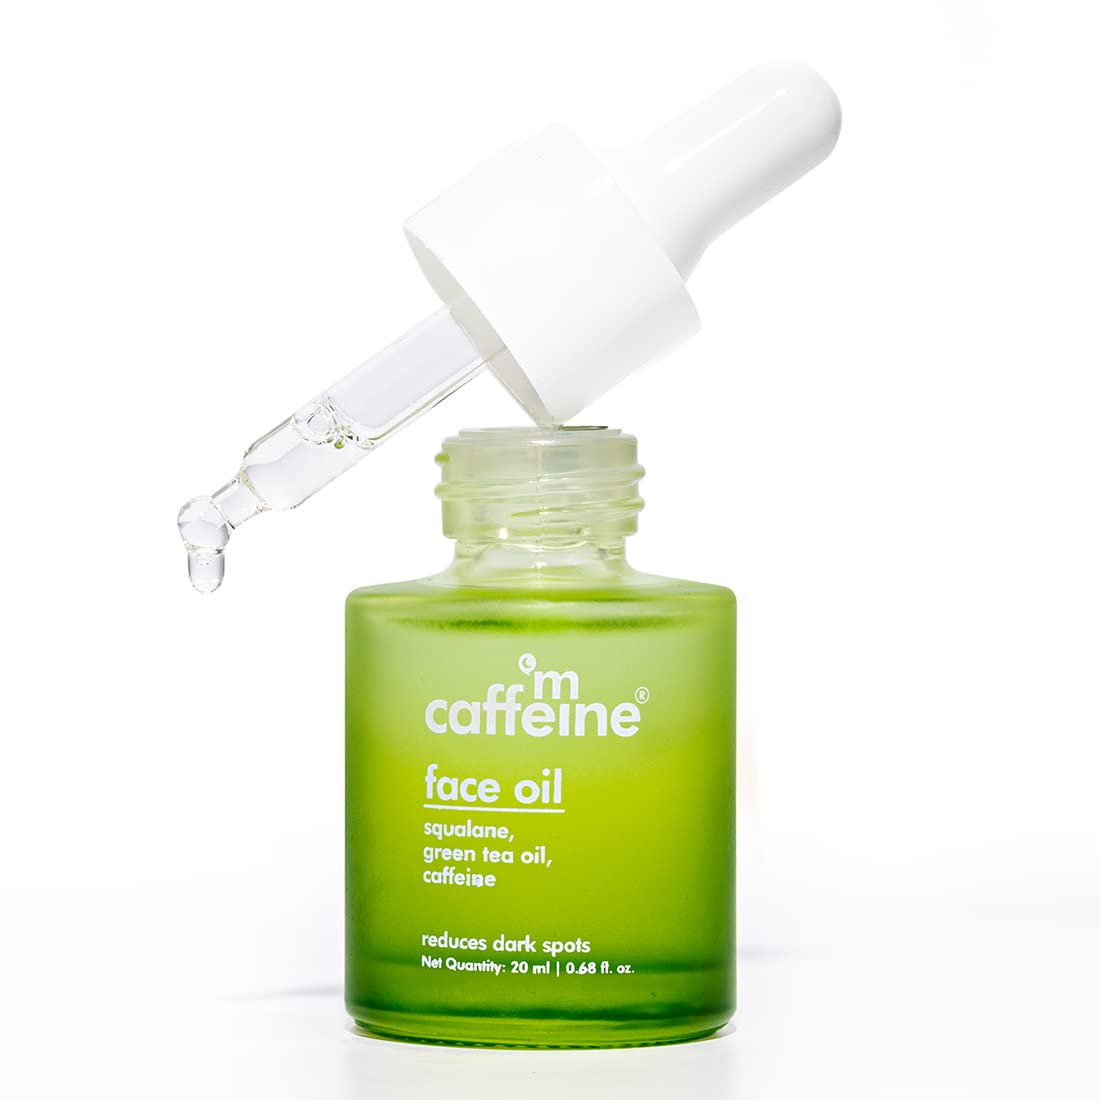 MCaffeine Green Tea & Squalane Face Oil for Dewy Glow - Hydrates, Reduces Dark Spots - Lightweight - 20ml